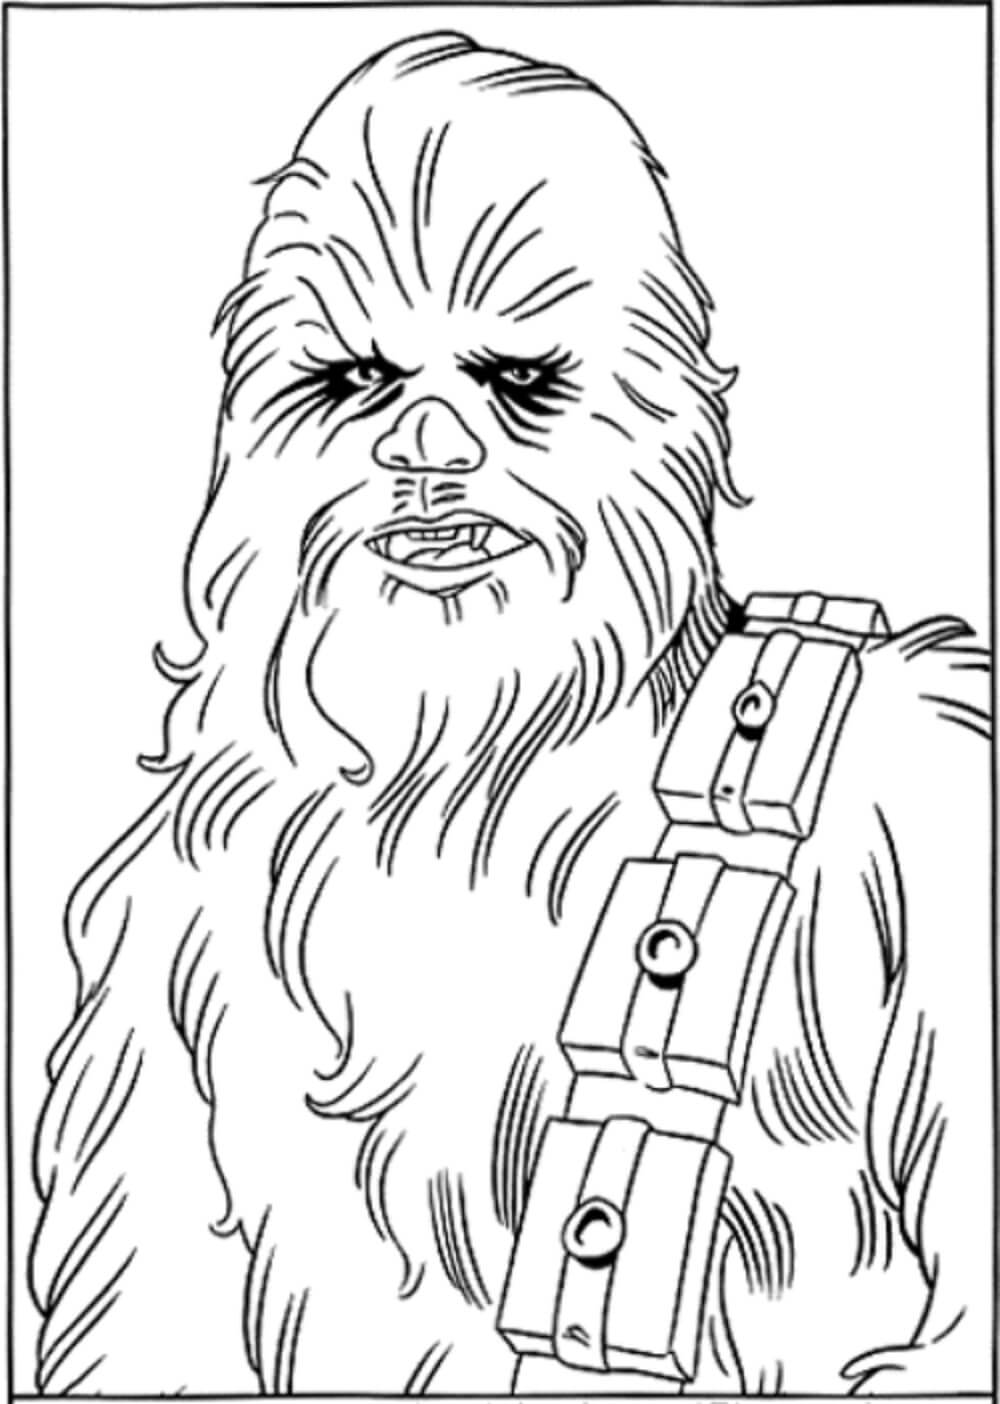 Portrait of Chewbacca